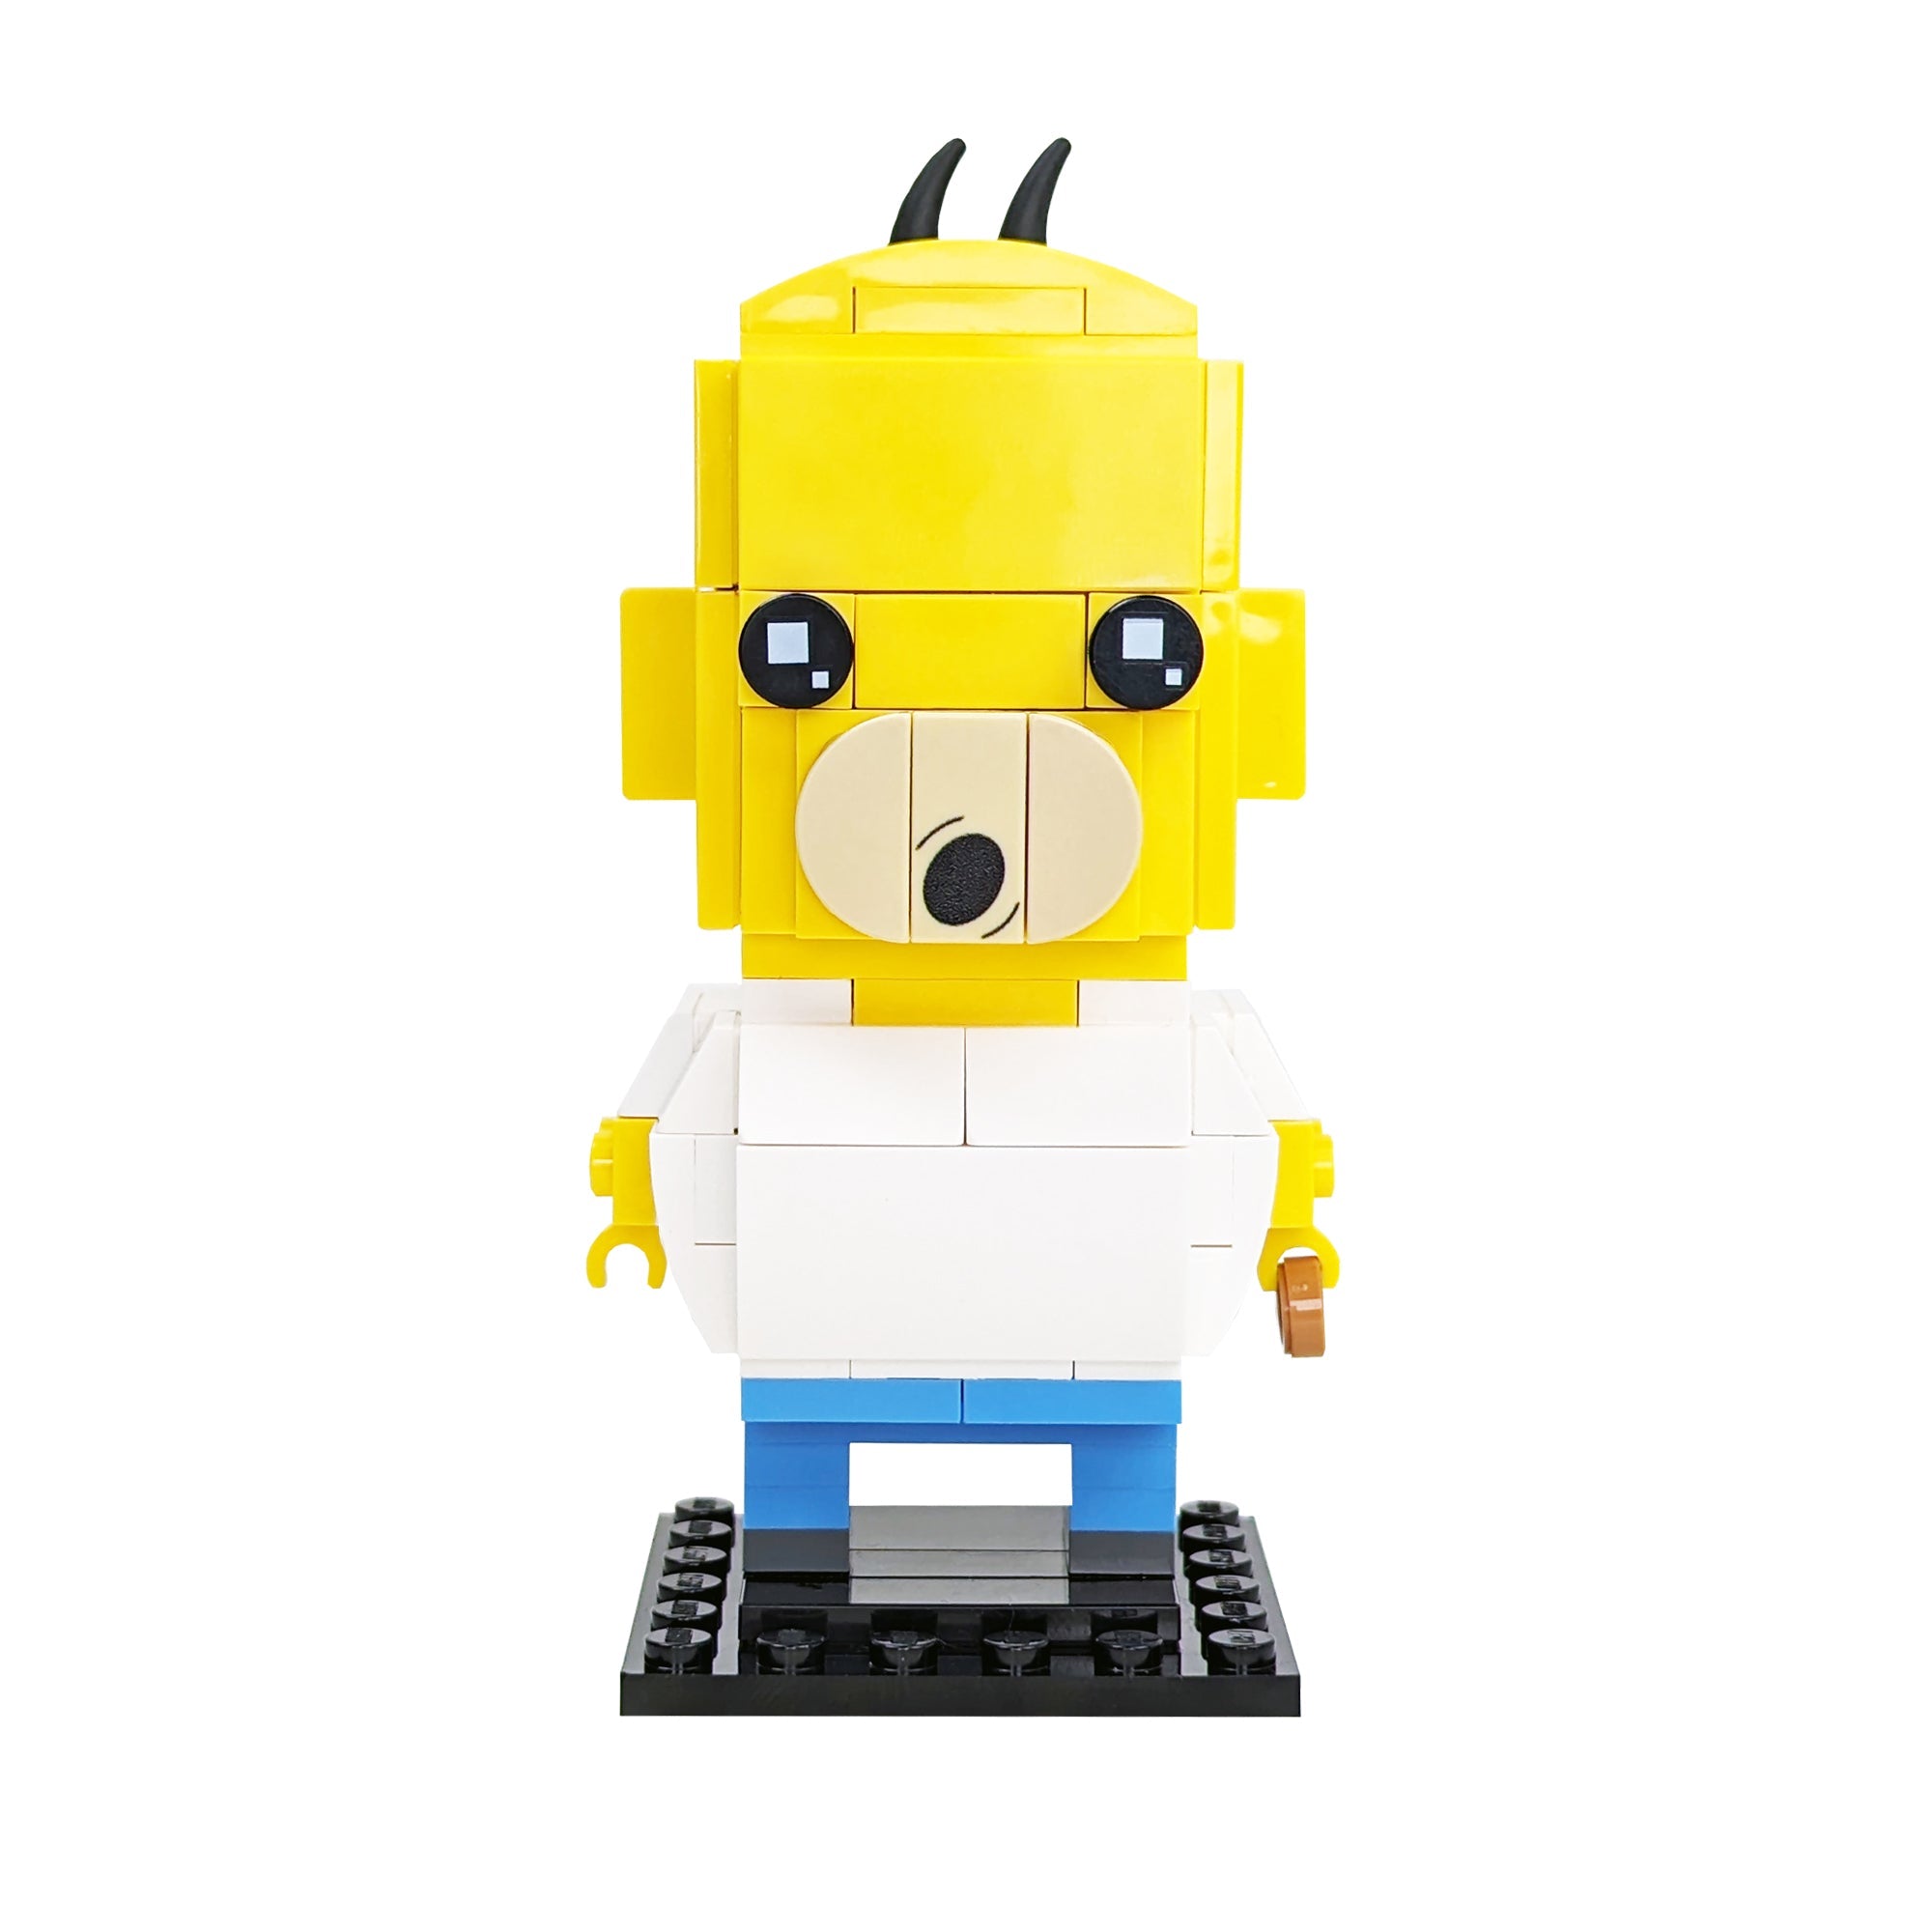 Custom Homer BrickHeadz made using LEGO parts